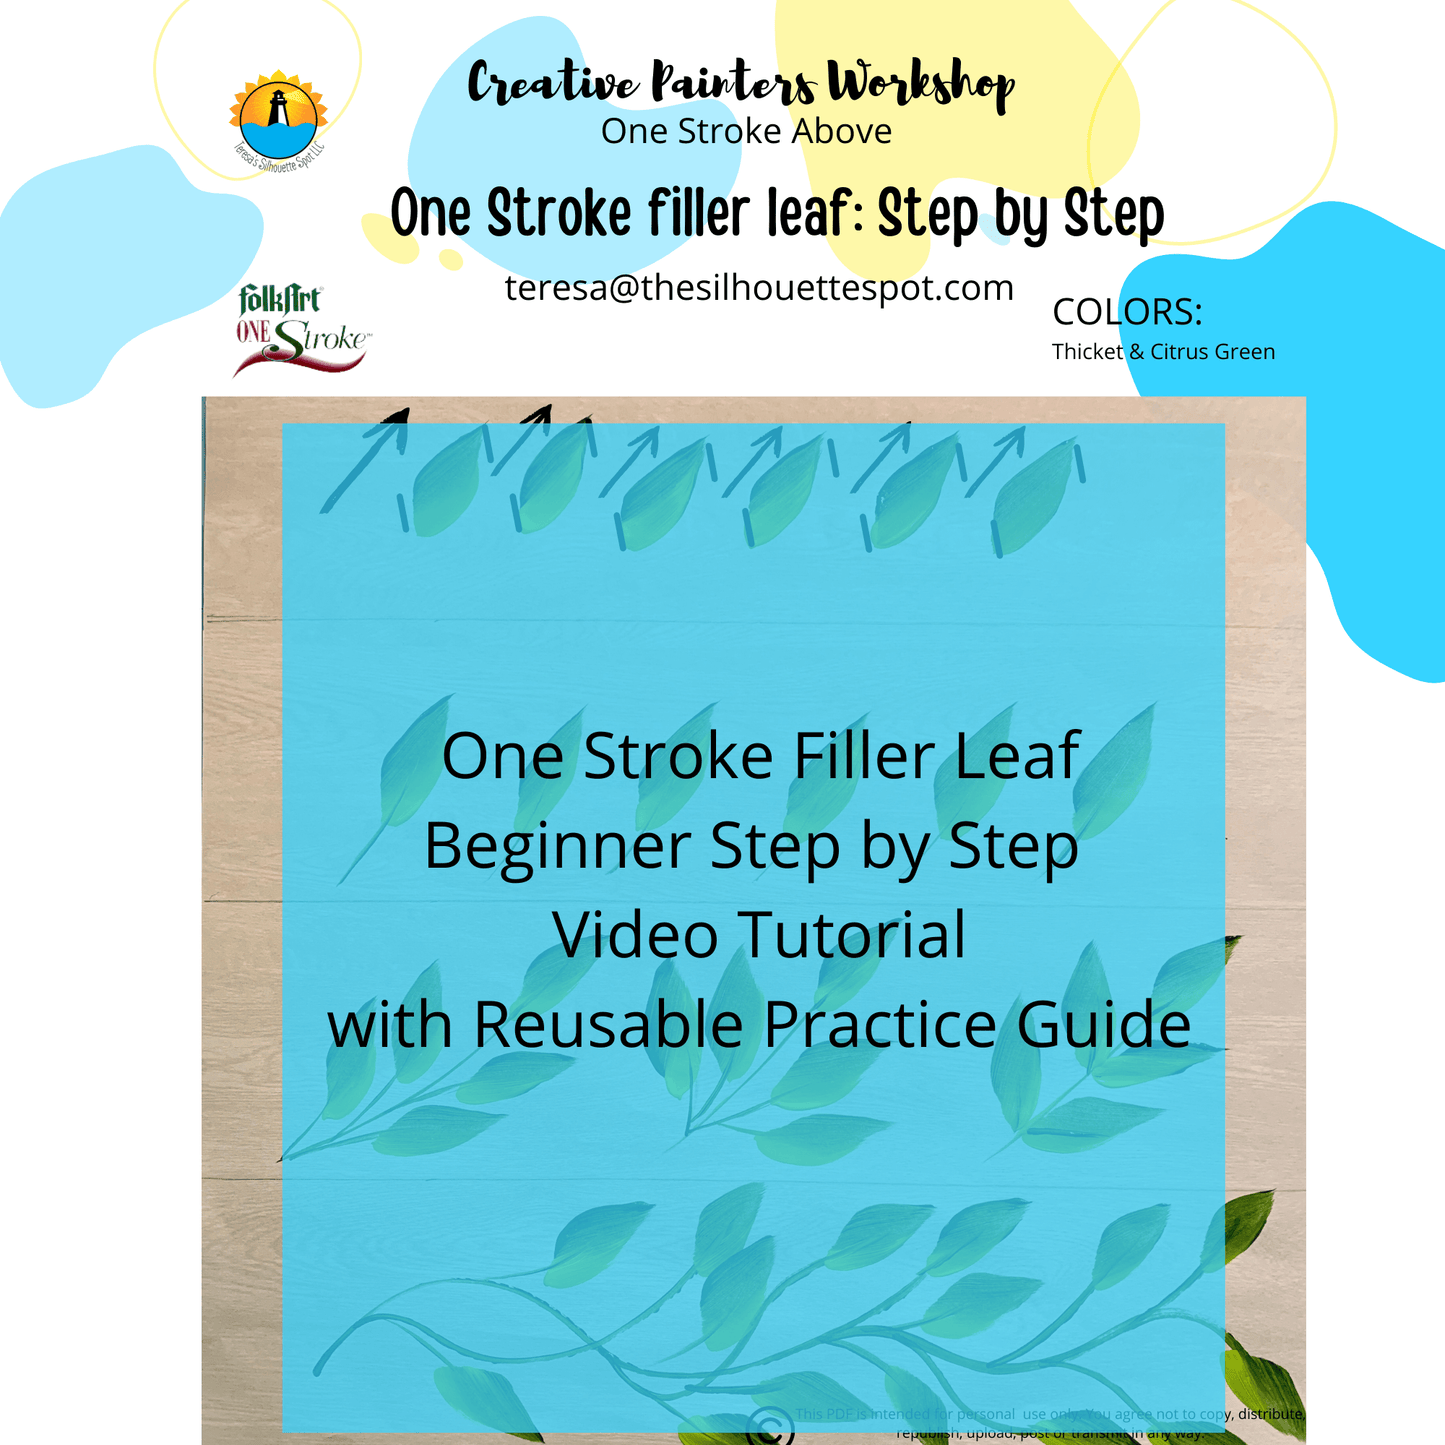 Beginner One Stroke Simple Leaf Paint Tutorial -Donna Dewberry  Step by Step One Stroke Simple Filler Leaf